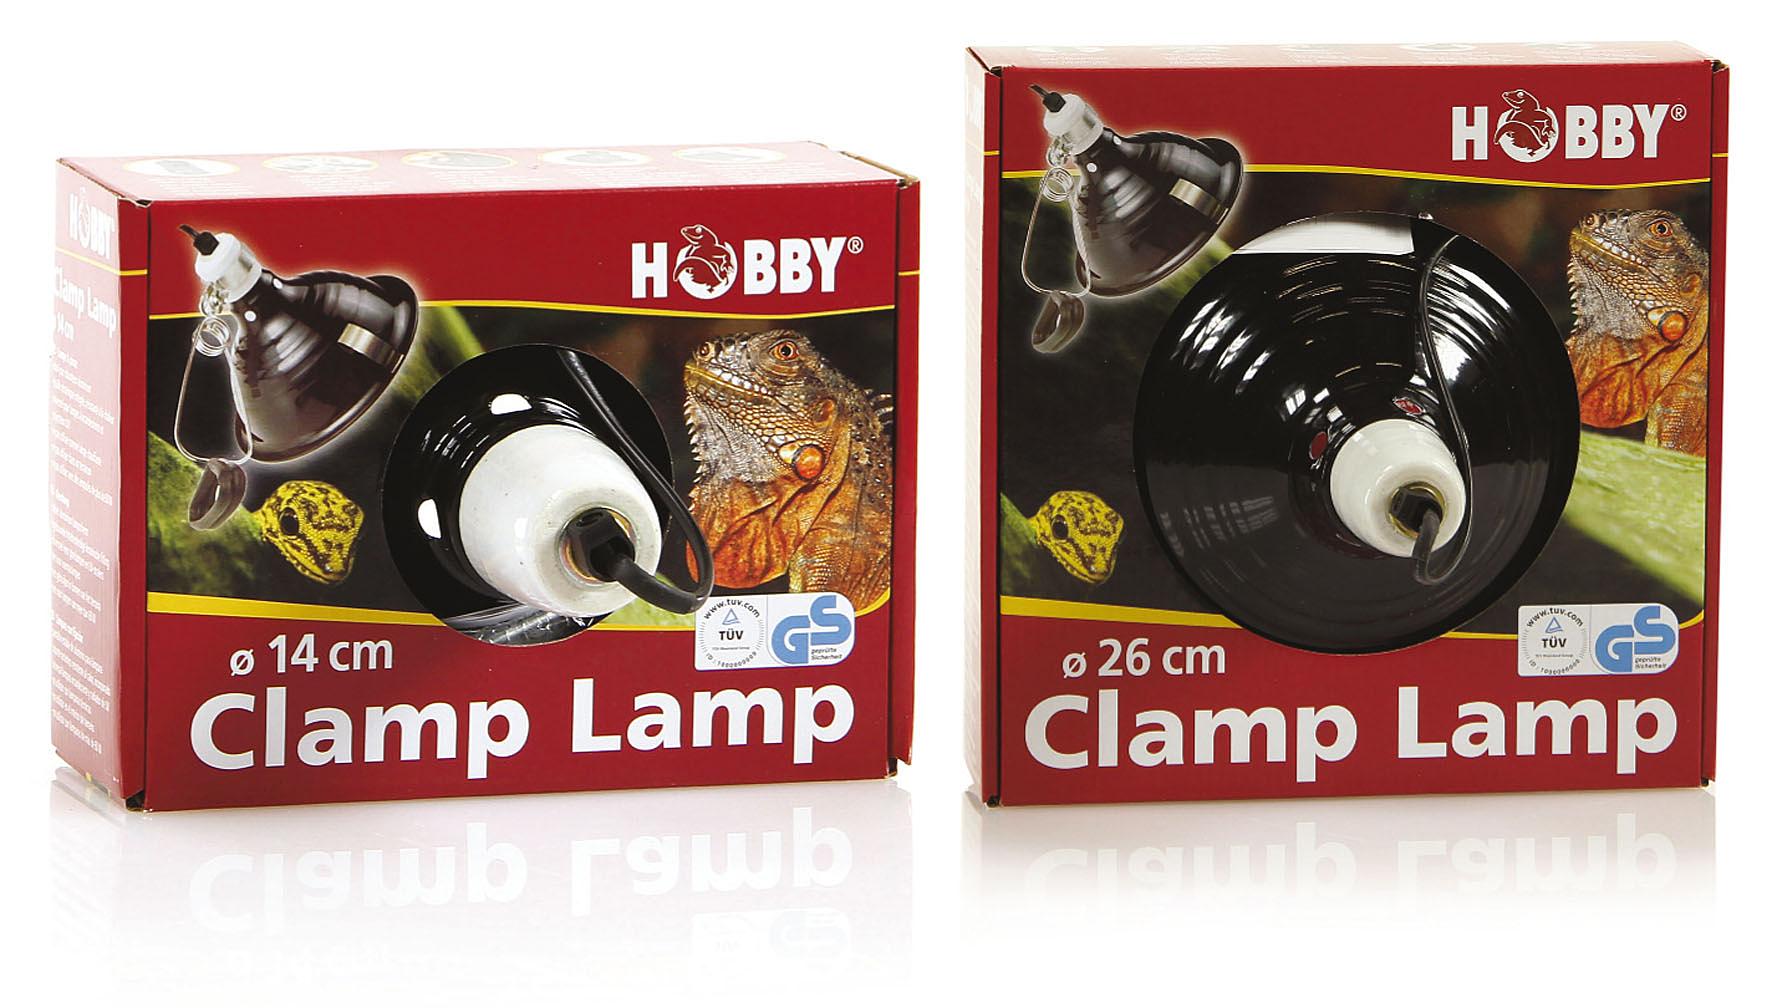 Hobby Clamp Lamp, Lampe à pince